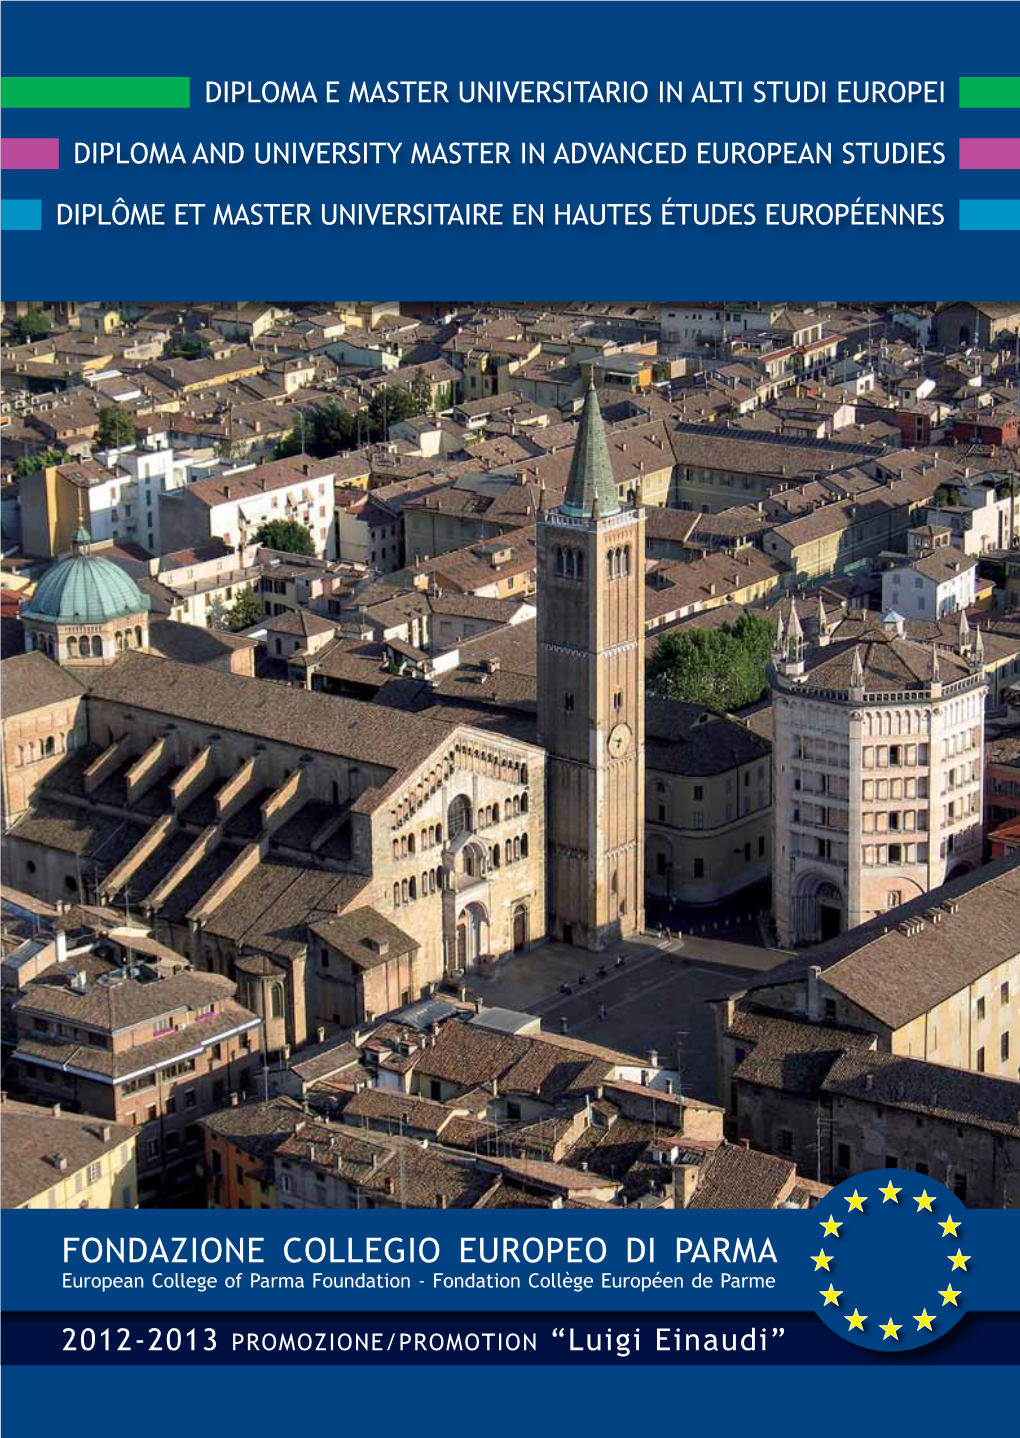 FONDAZIONE COLLEGIO EUROPEO DI PARMA European College of Parma Foundation - Fondation Collège Européen De Parme